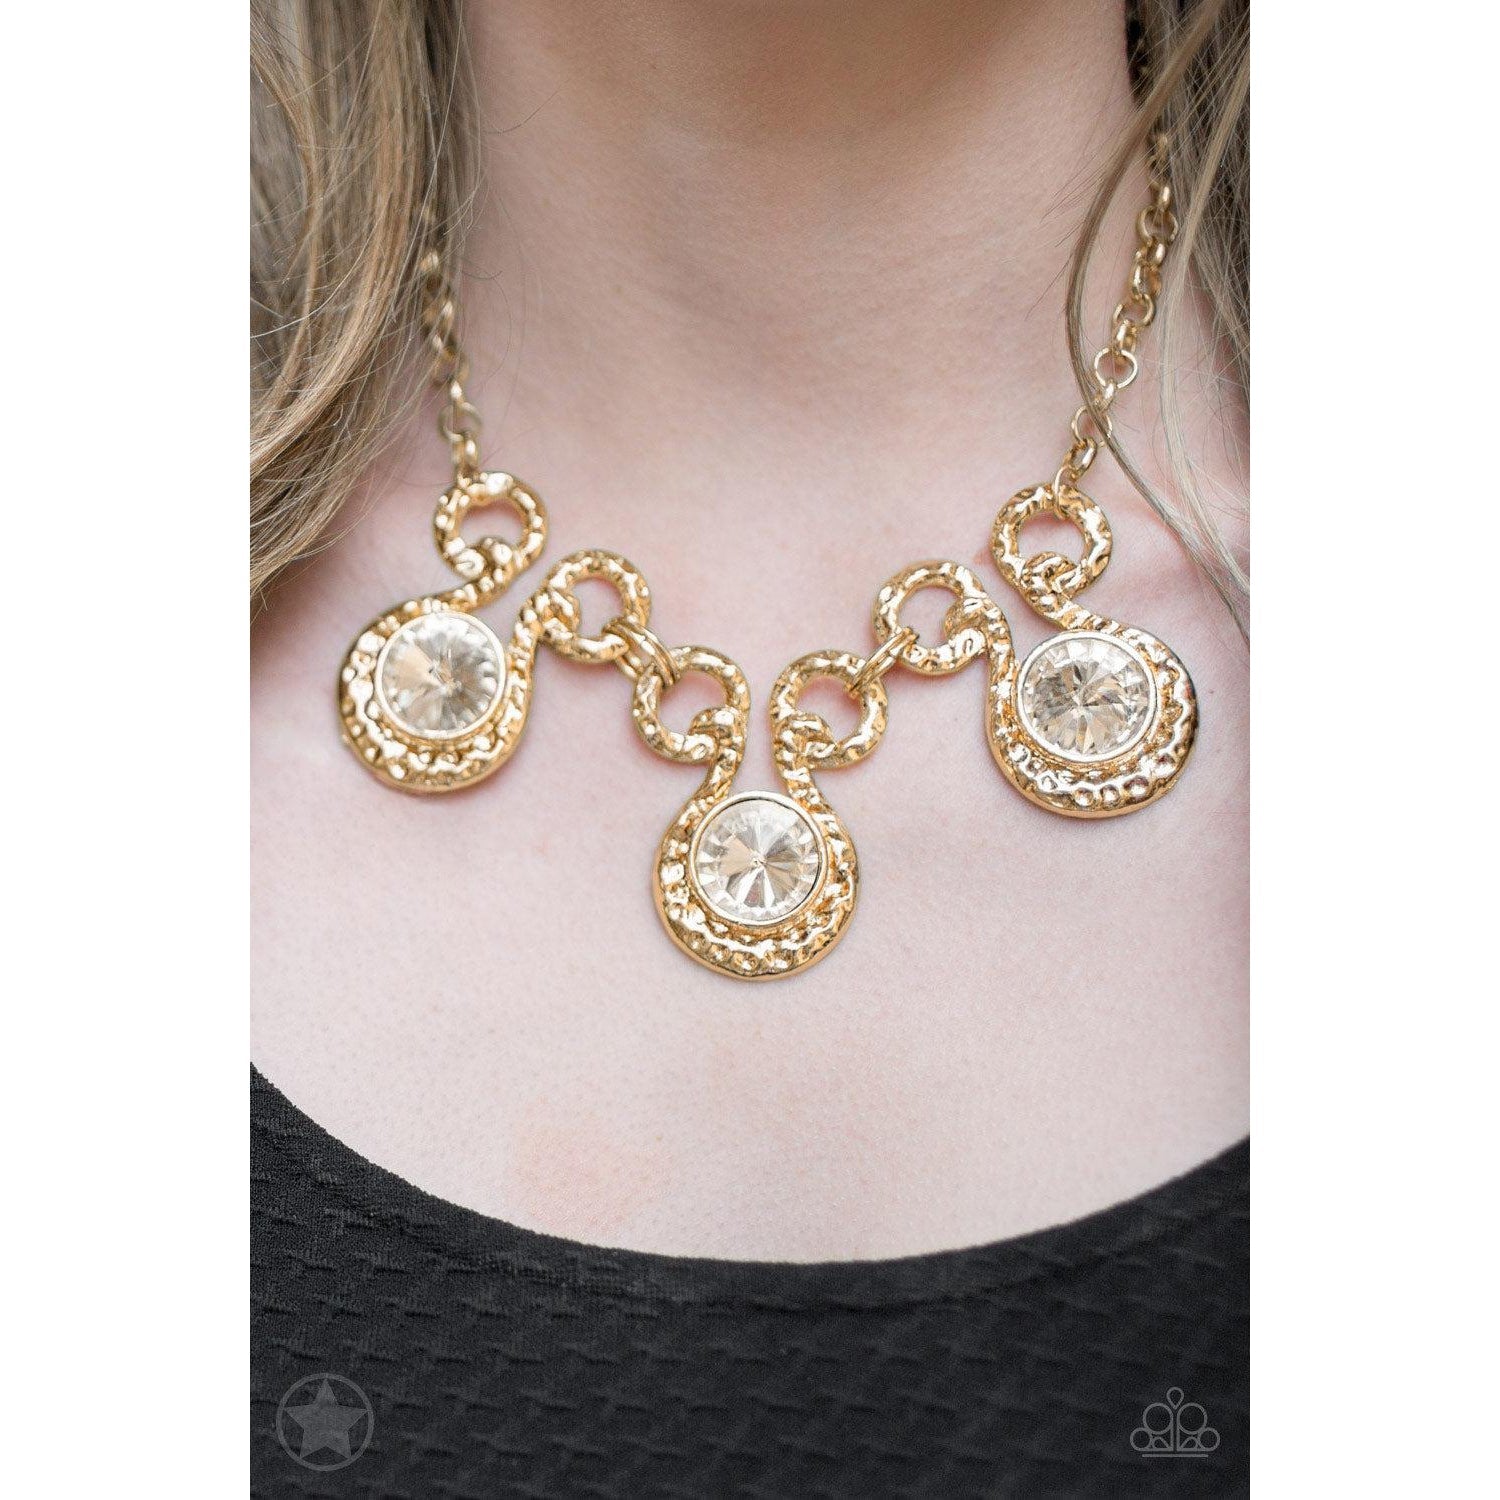 Paparazzi Hypnotized Gold Over-sized Rhinestones Necklace & Earring Set-Necklace-SPARKLE ARMAND